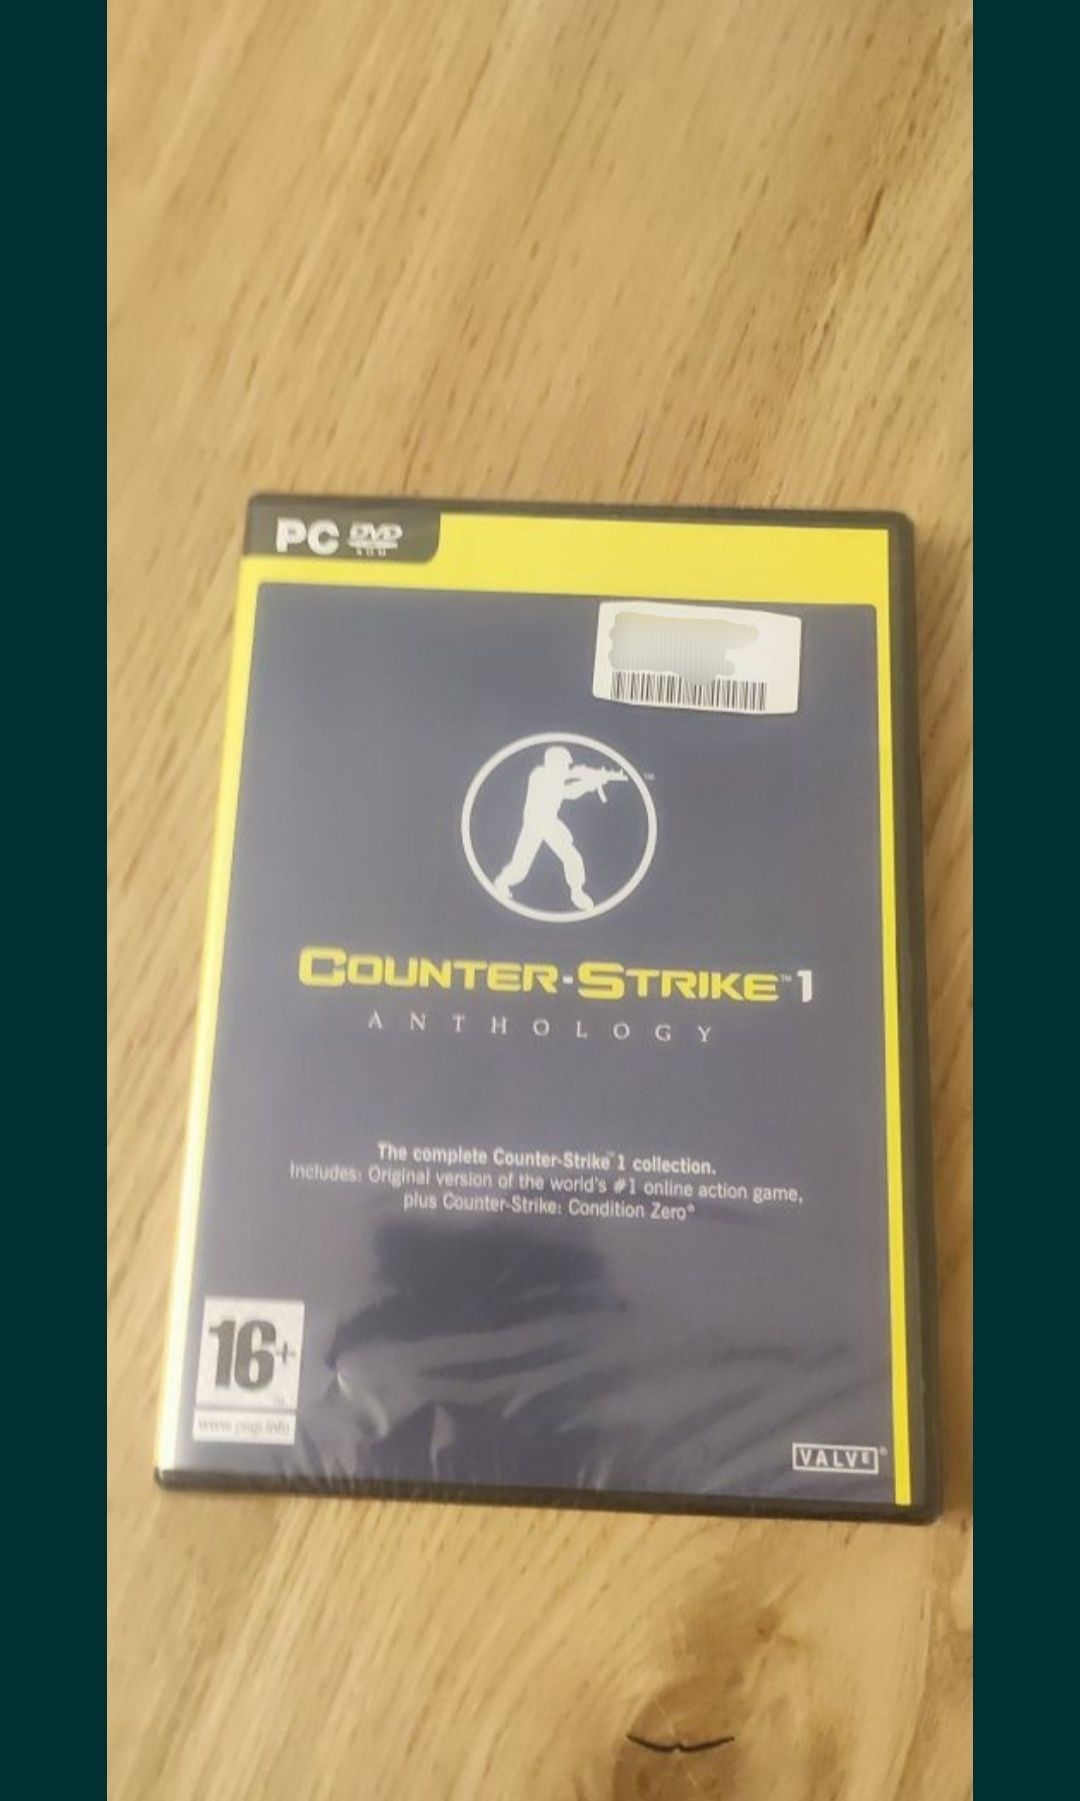 Counter strike 1 Anthology NOWA Klucz Steam 1.6